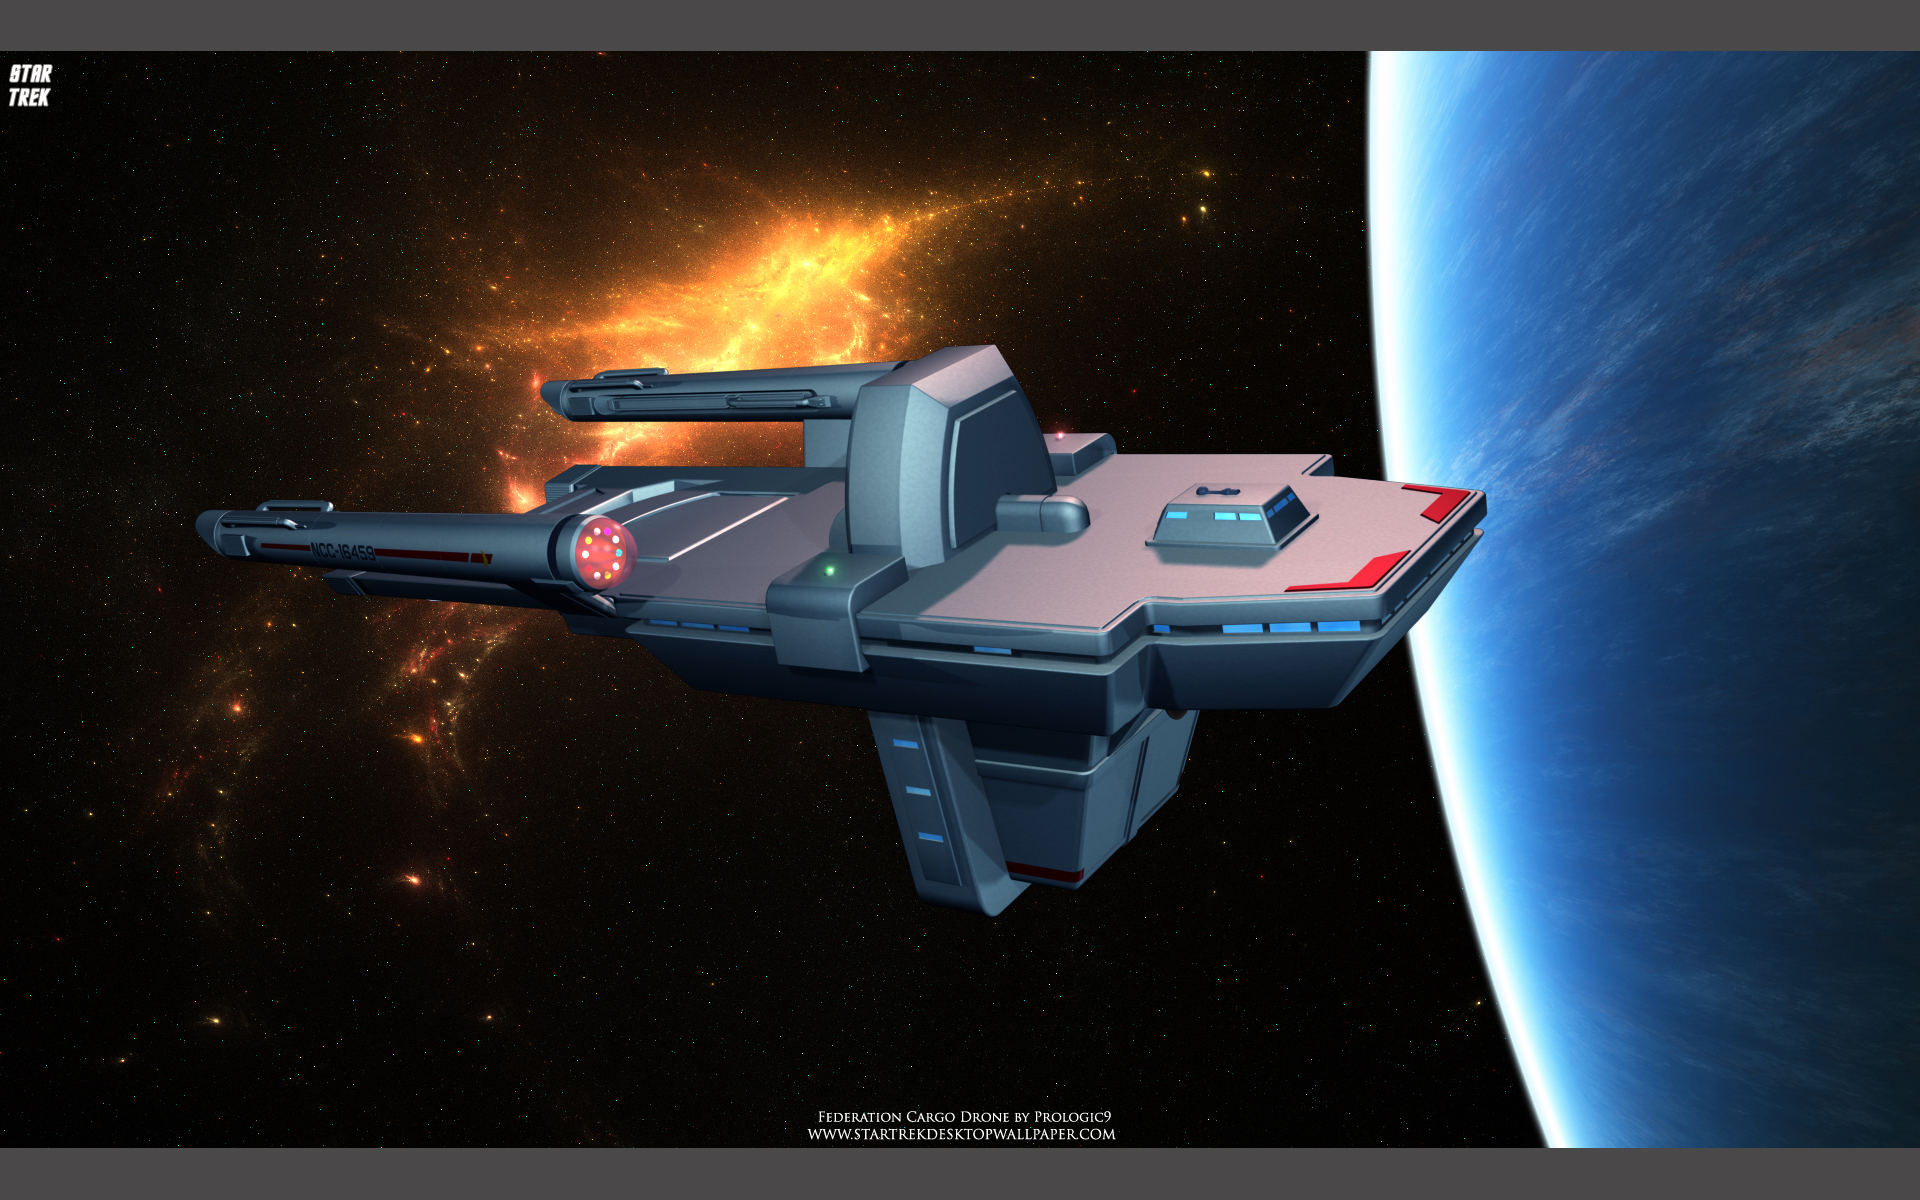 - Star Trek Federation Cargo Drone - free Star Trek computer desktop wallpaper, pictures, images.